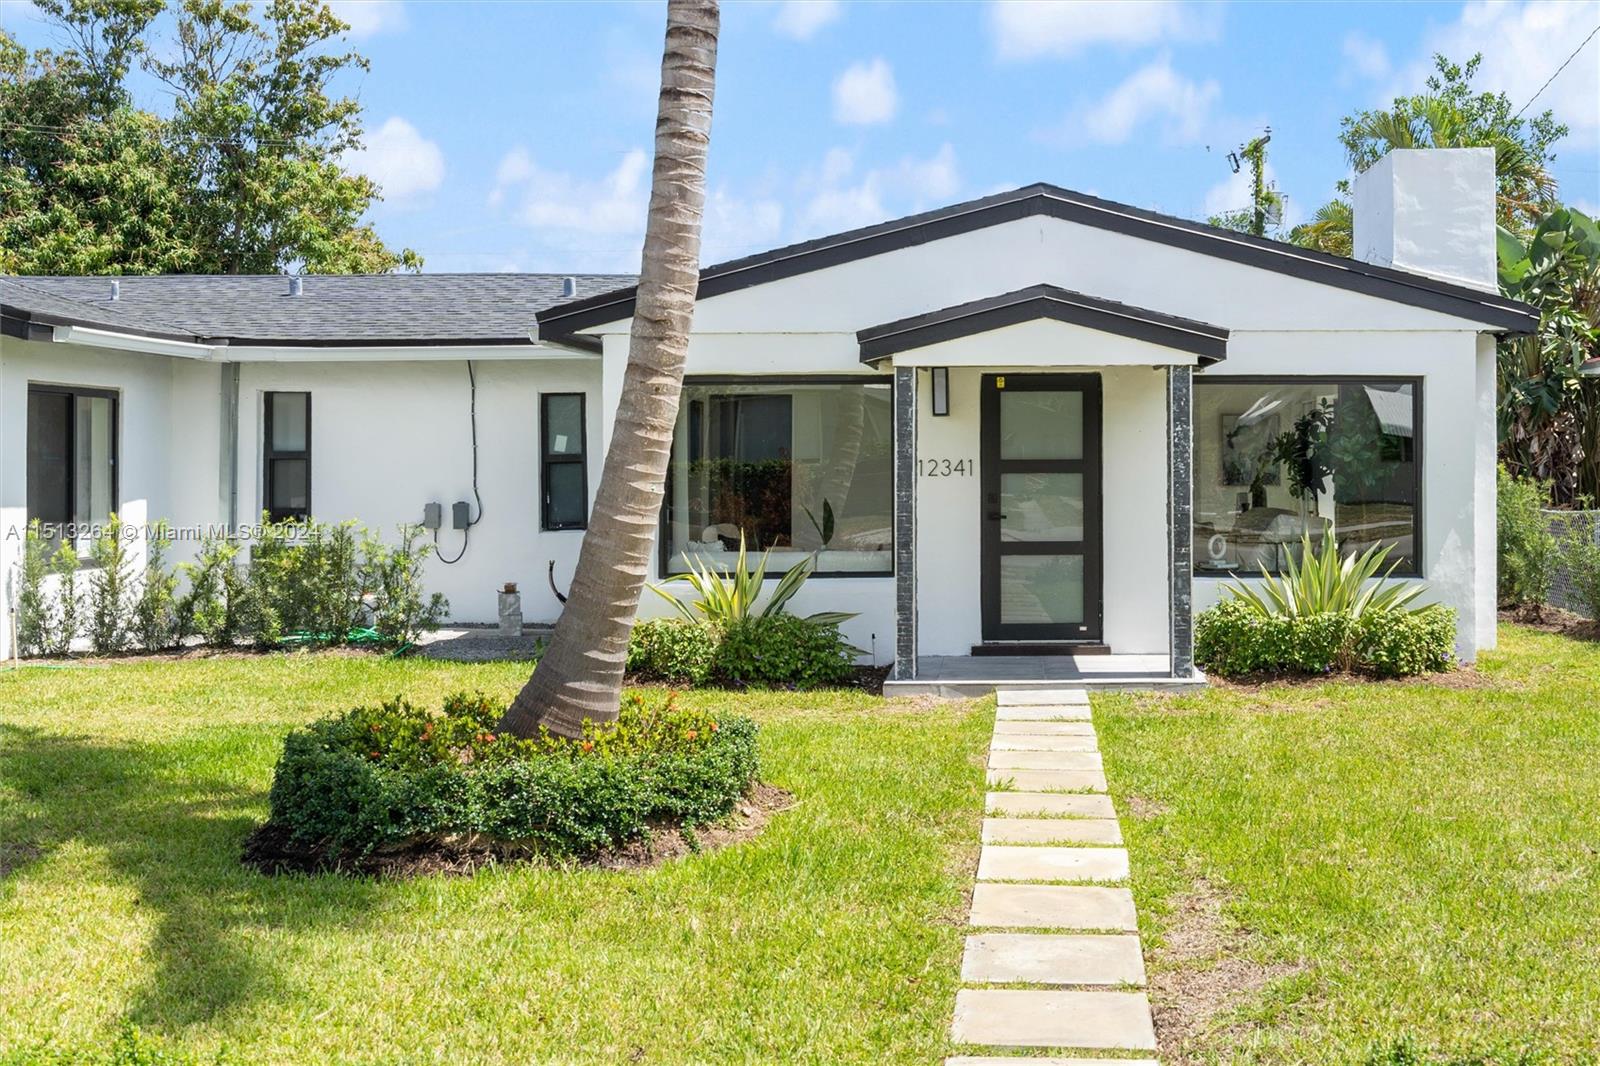 Rental Property at 12345 Ne 11th Ct, North Miami, Miami-Dade County, Florida -  - $945,000 MO.